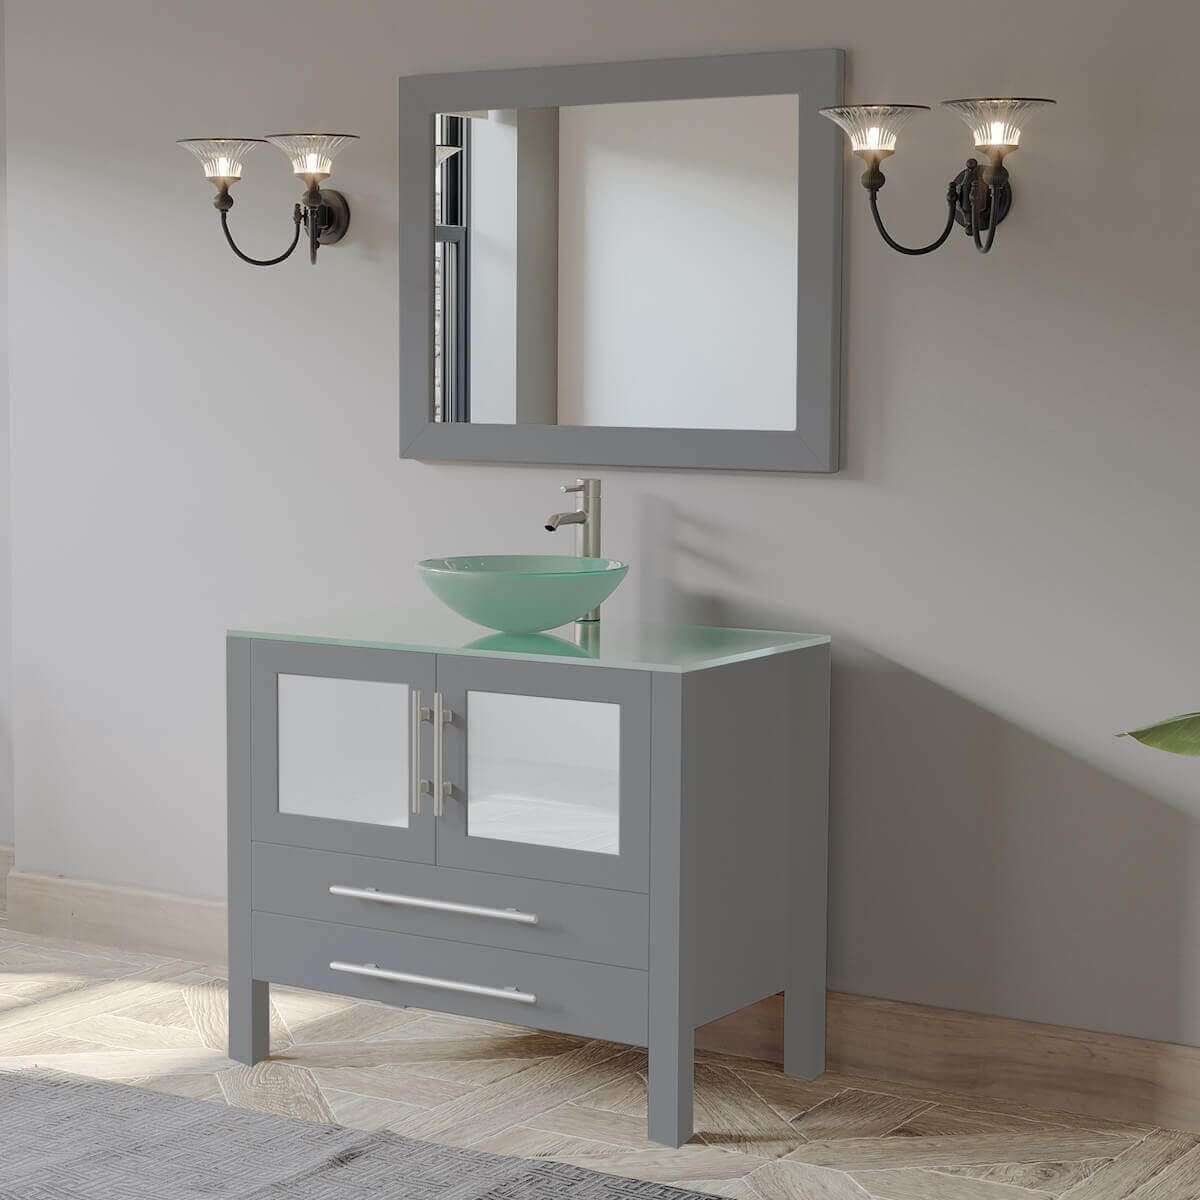 Cambridge Plumbing Complete 36" Gray Vanity Set with Brushed Nickel Plumbing 8111B-G-BN in Bathroom #faucet finish_brushed nickel